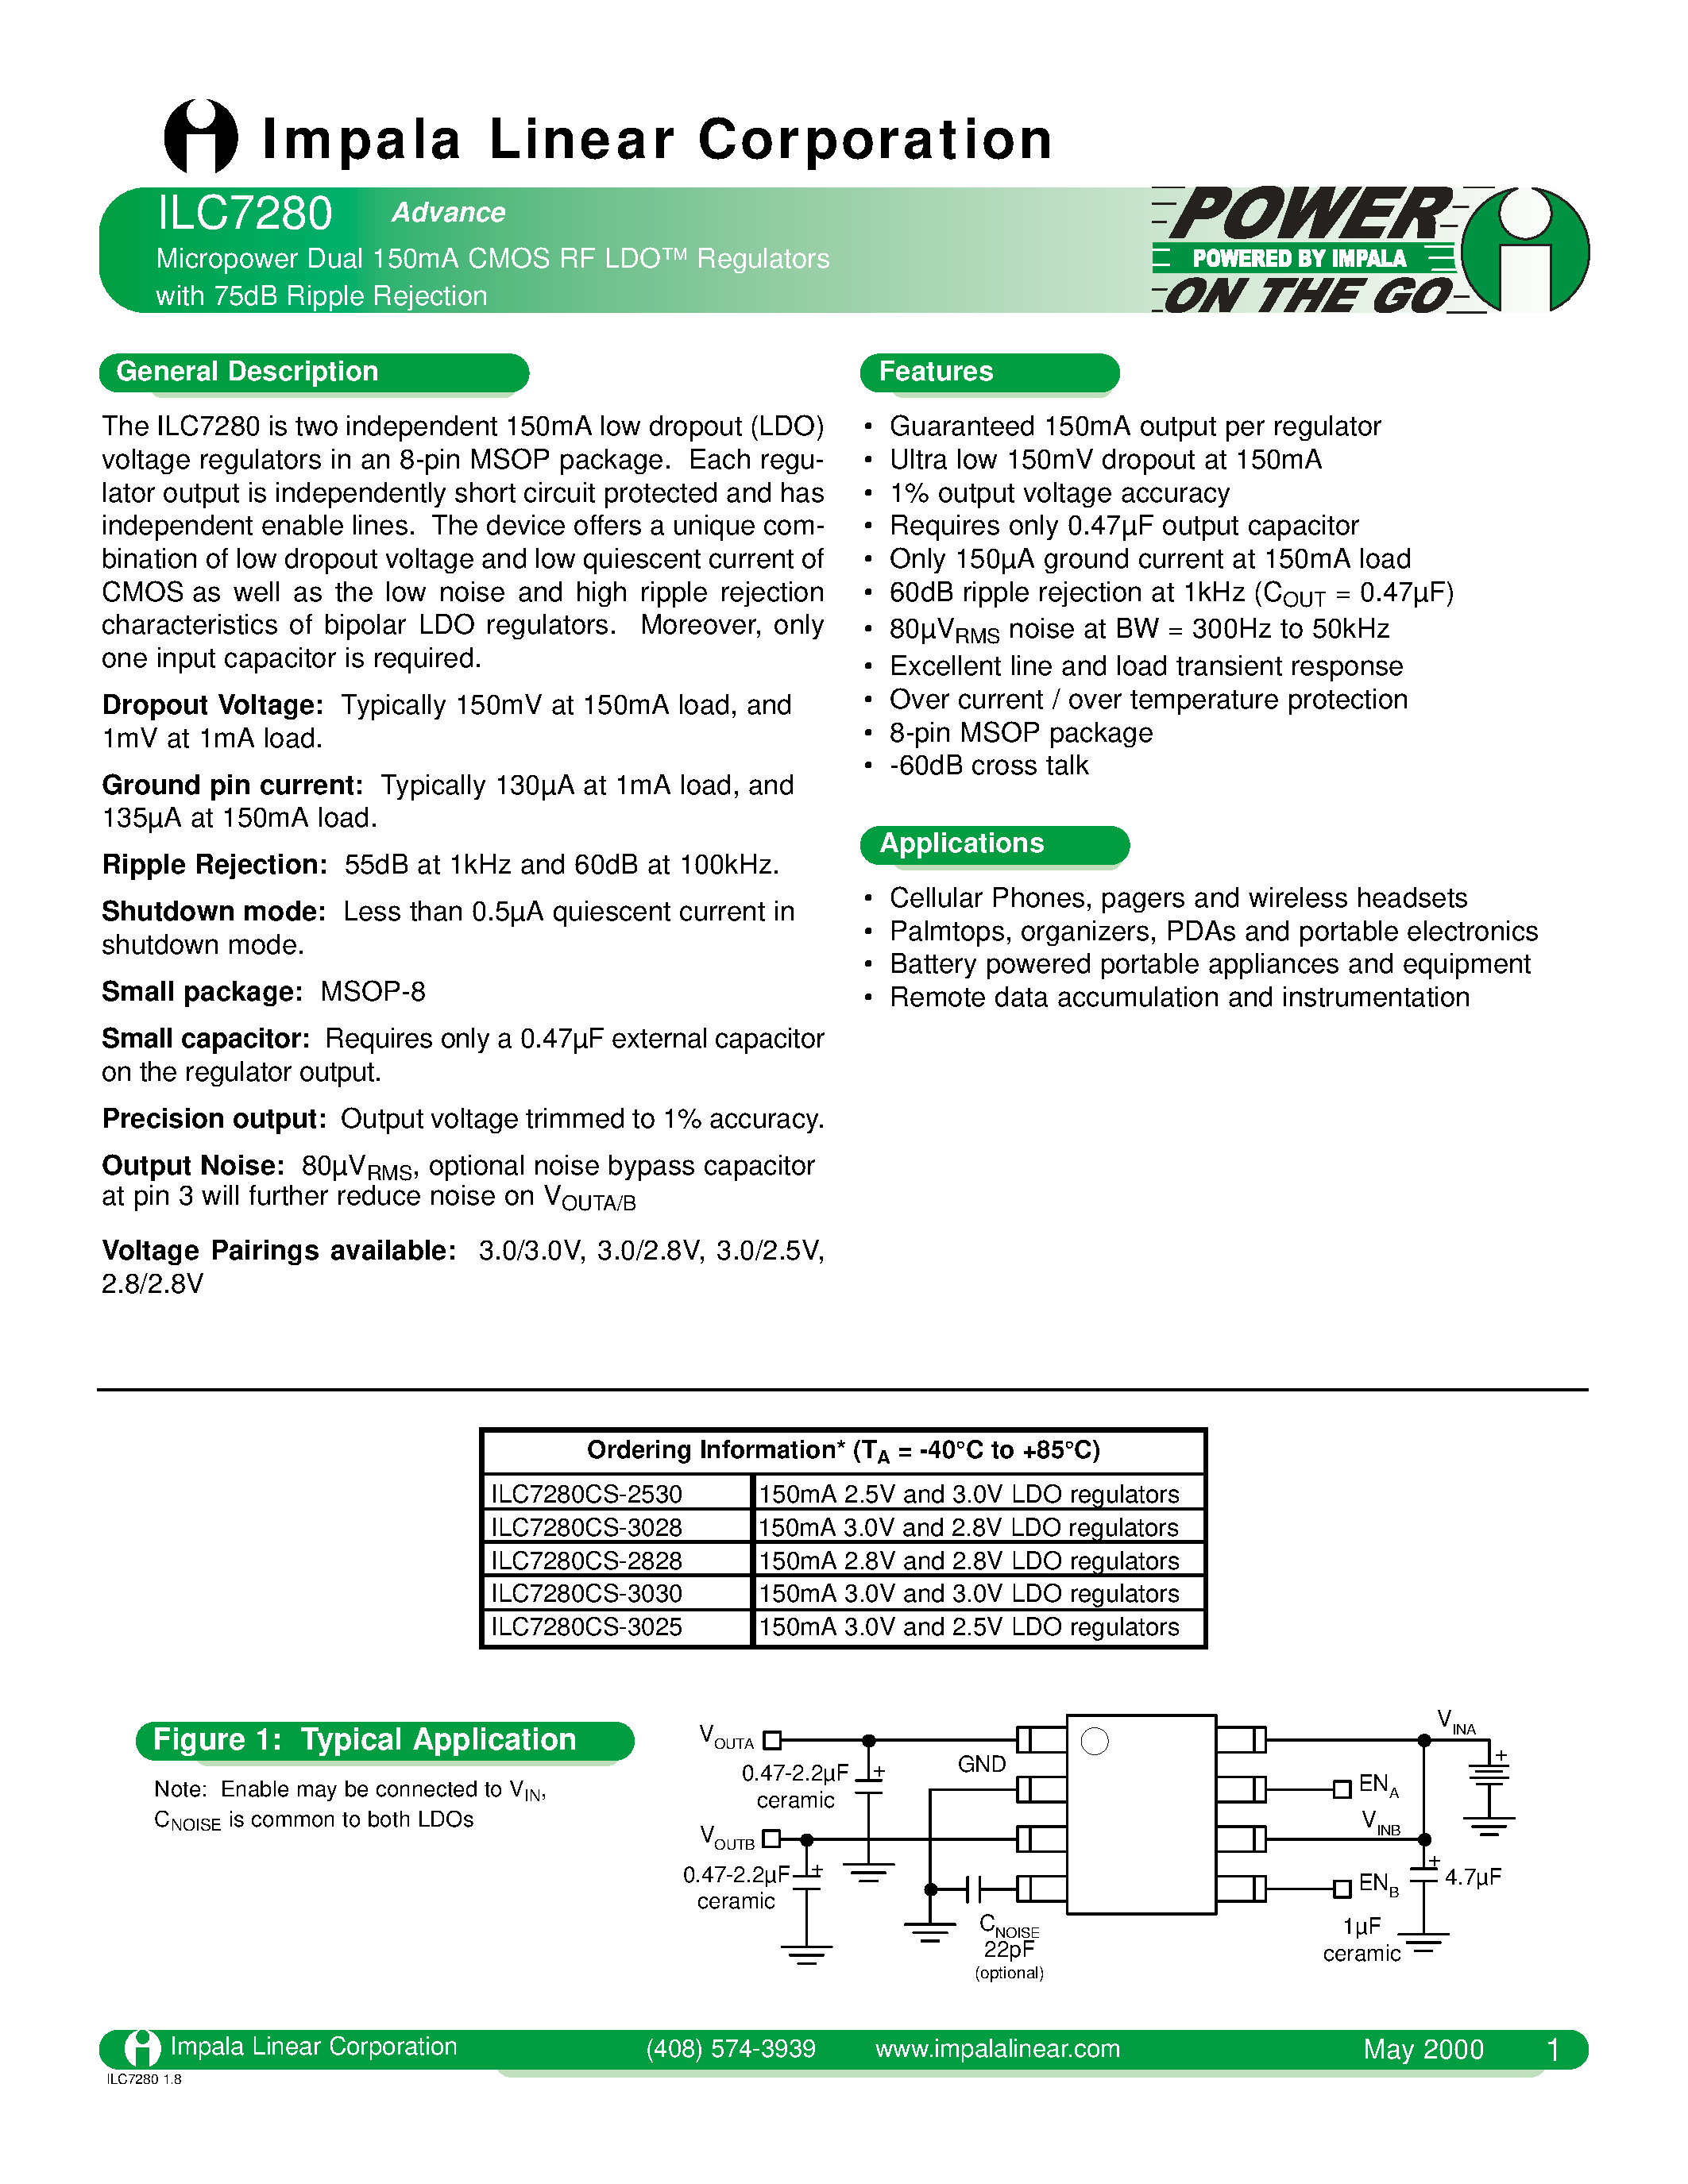 Datasheet ILC7280CS-3030 - MICROPOWER DUAL 150MA CMOS RF LDO REGULATORS WITH 75DB RIPPLE REJECTION page 1